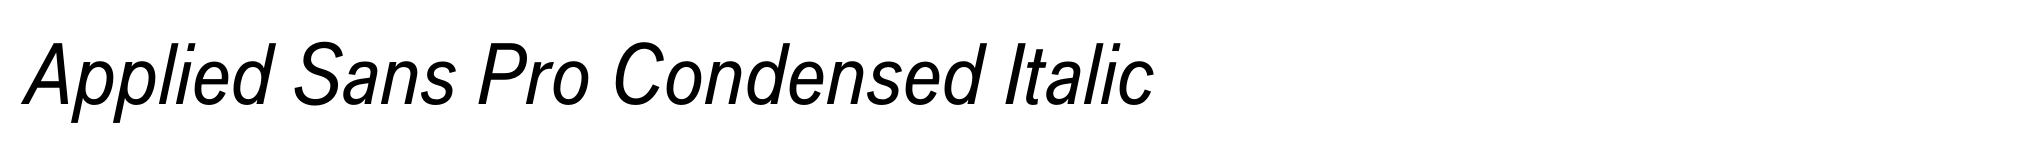 Applied Sans Pro Condensed Italic image